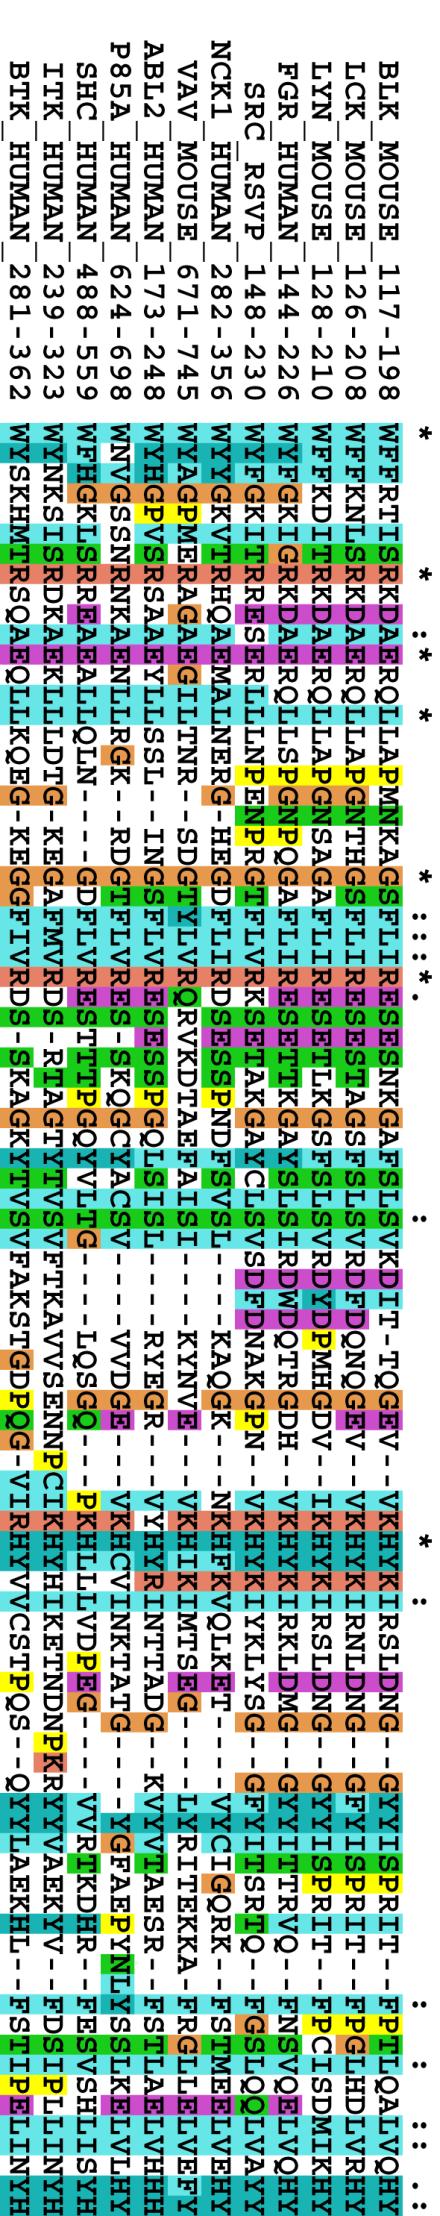 Protein Domains SH2 Motif Janus Kinase 2 Modular Sequence Architecture